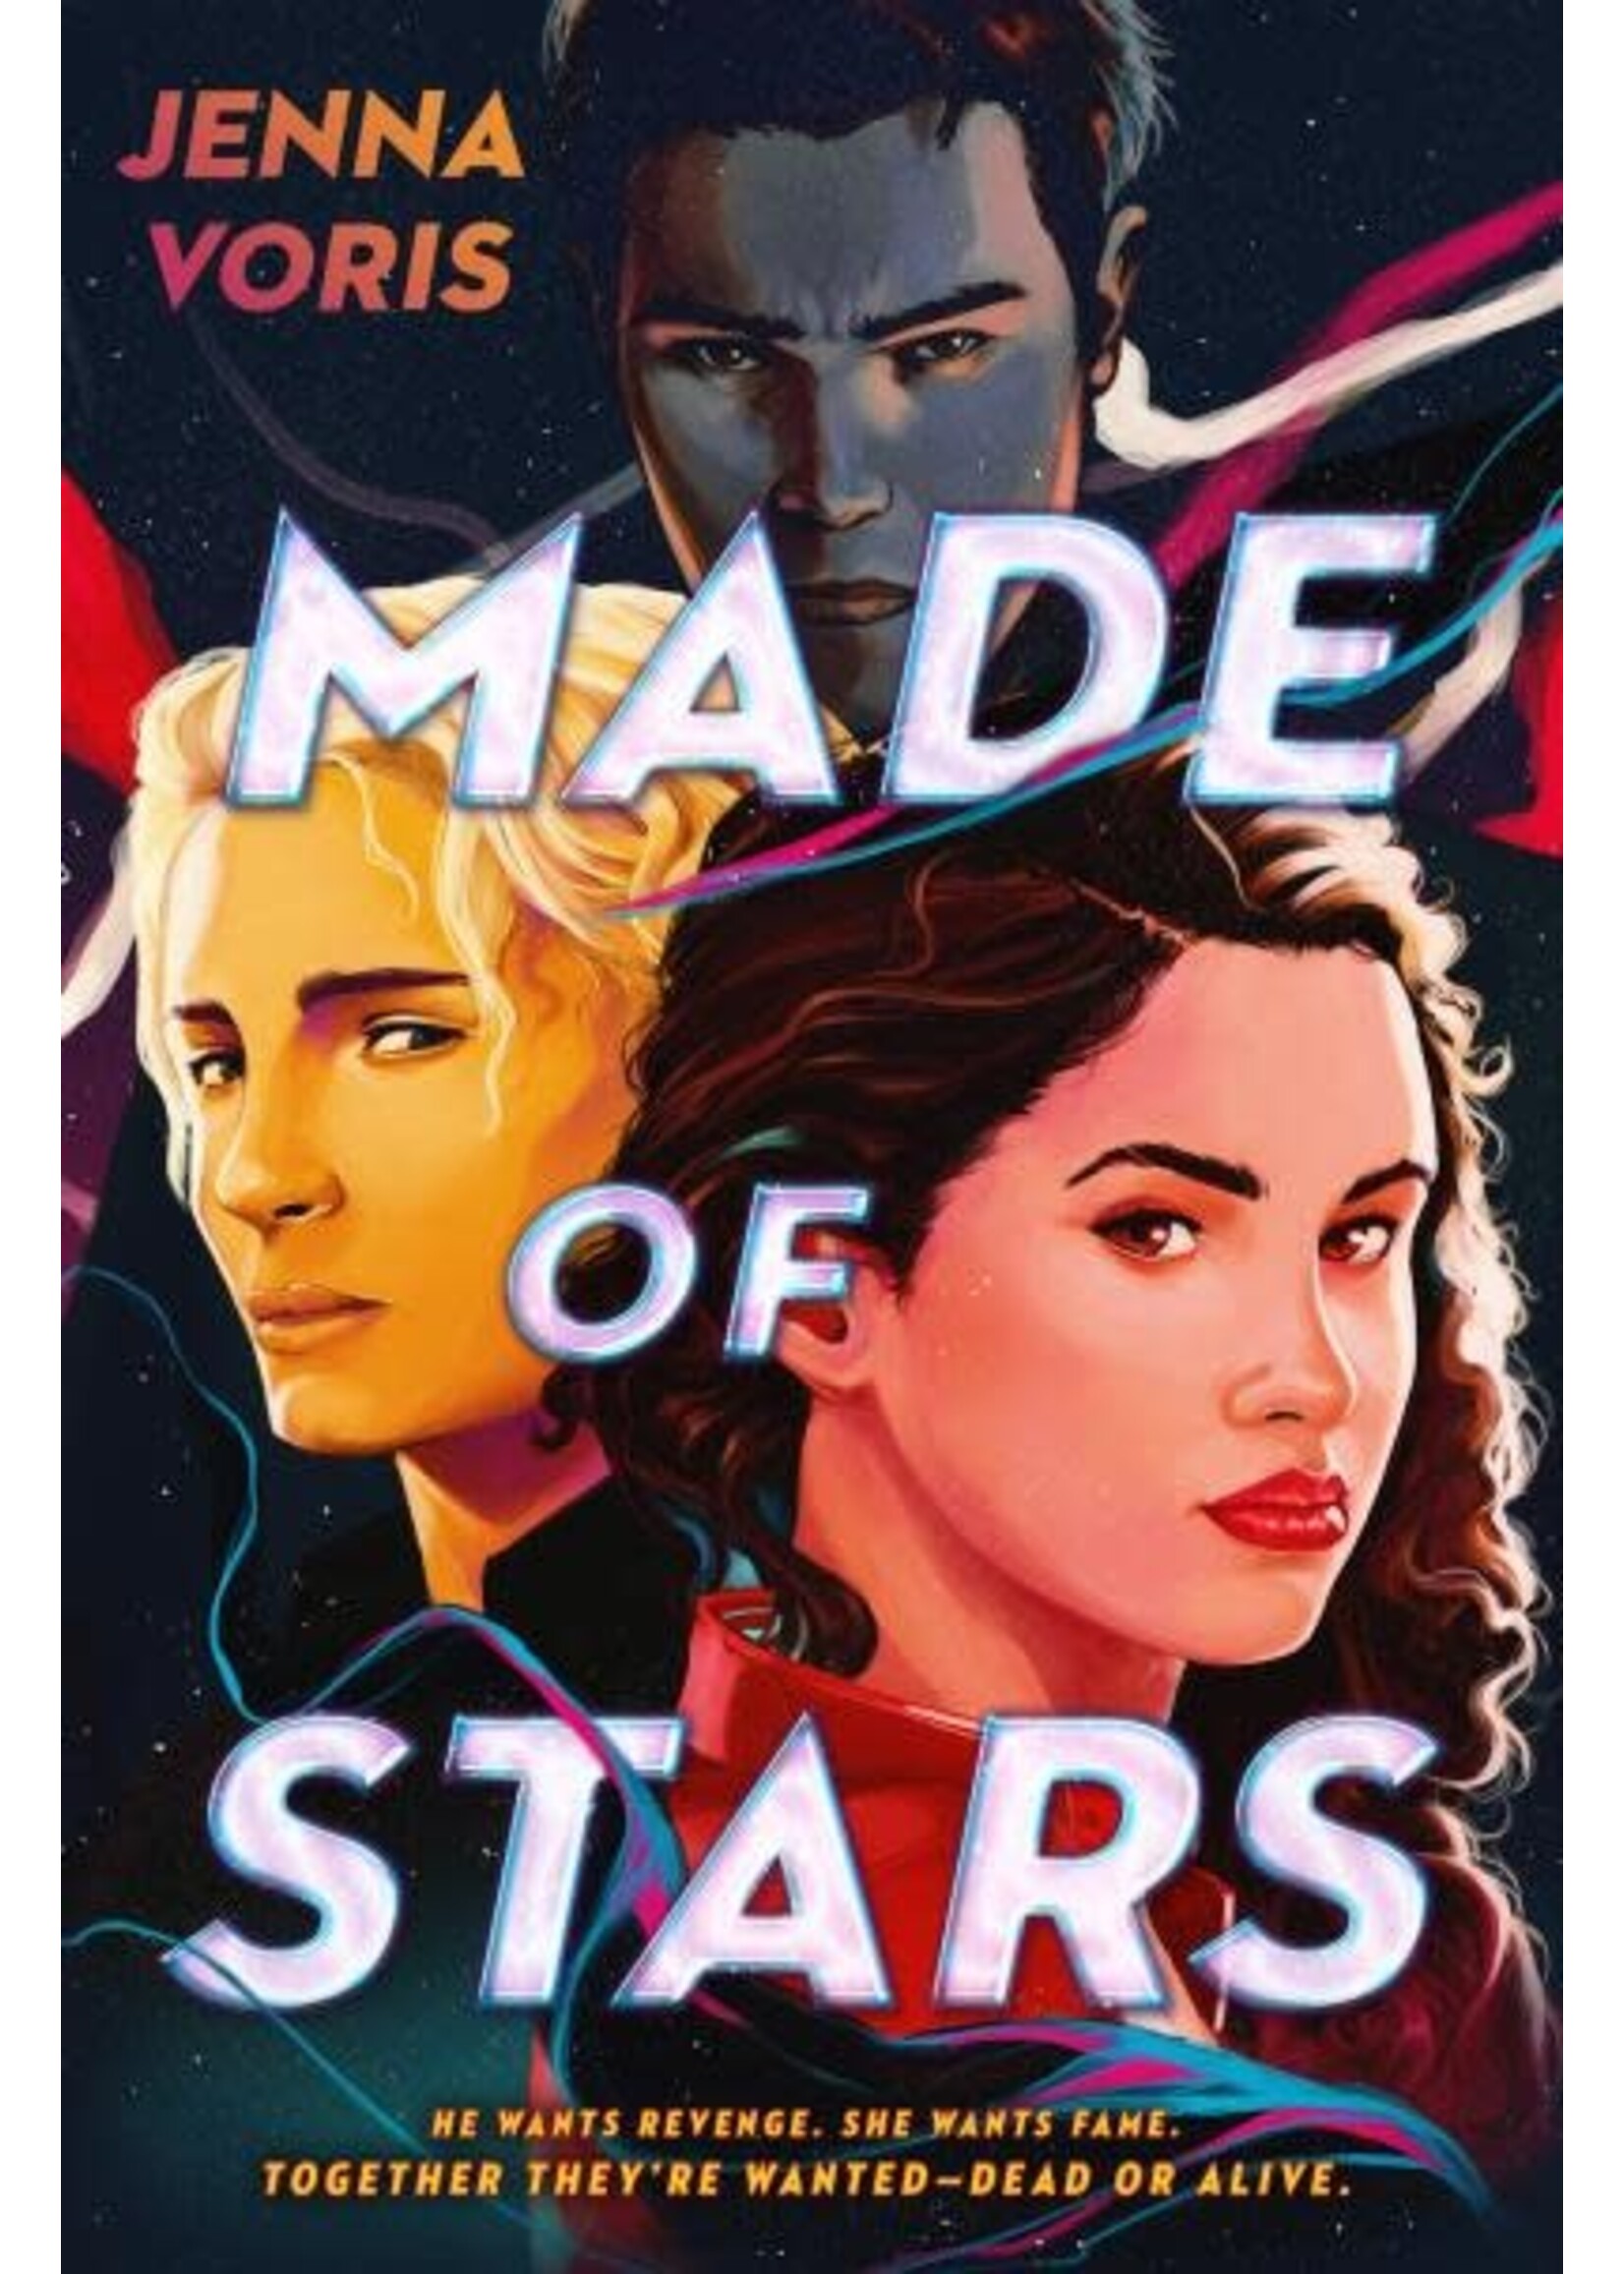 Made of Stars by Jenna Voris